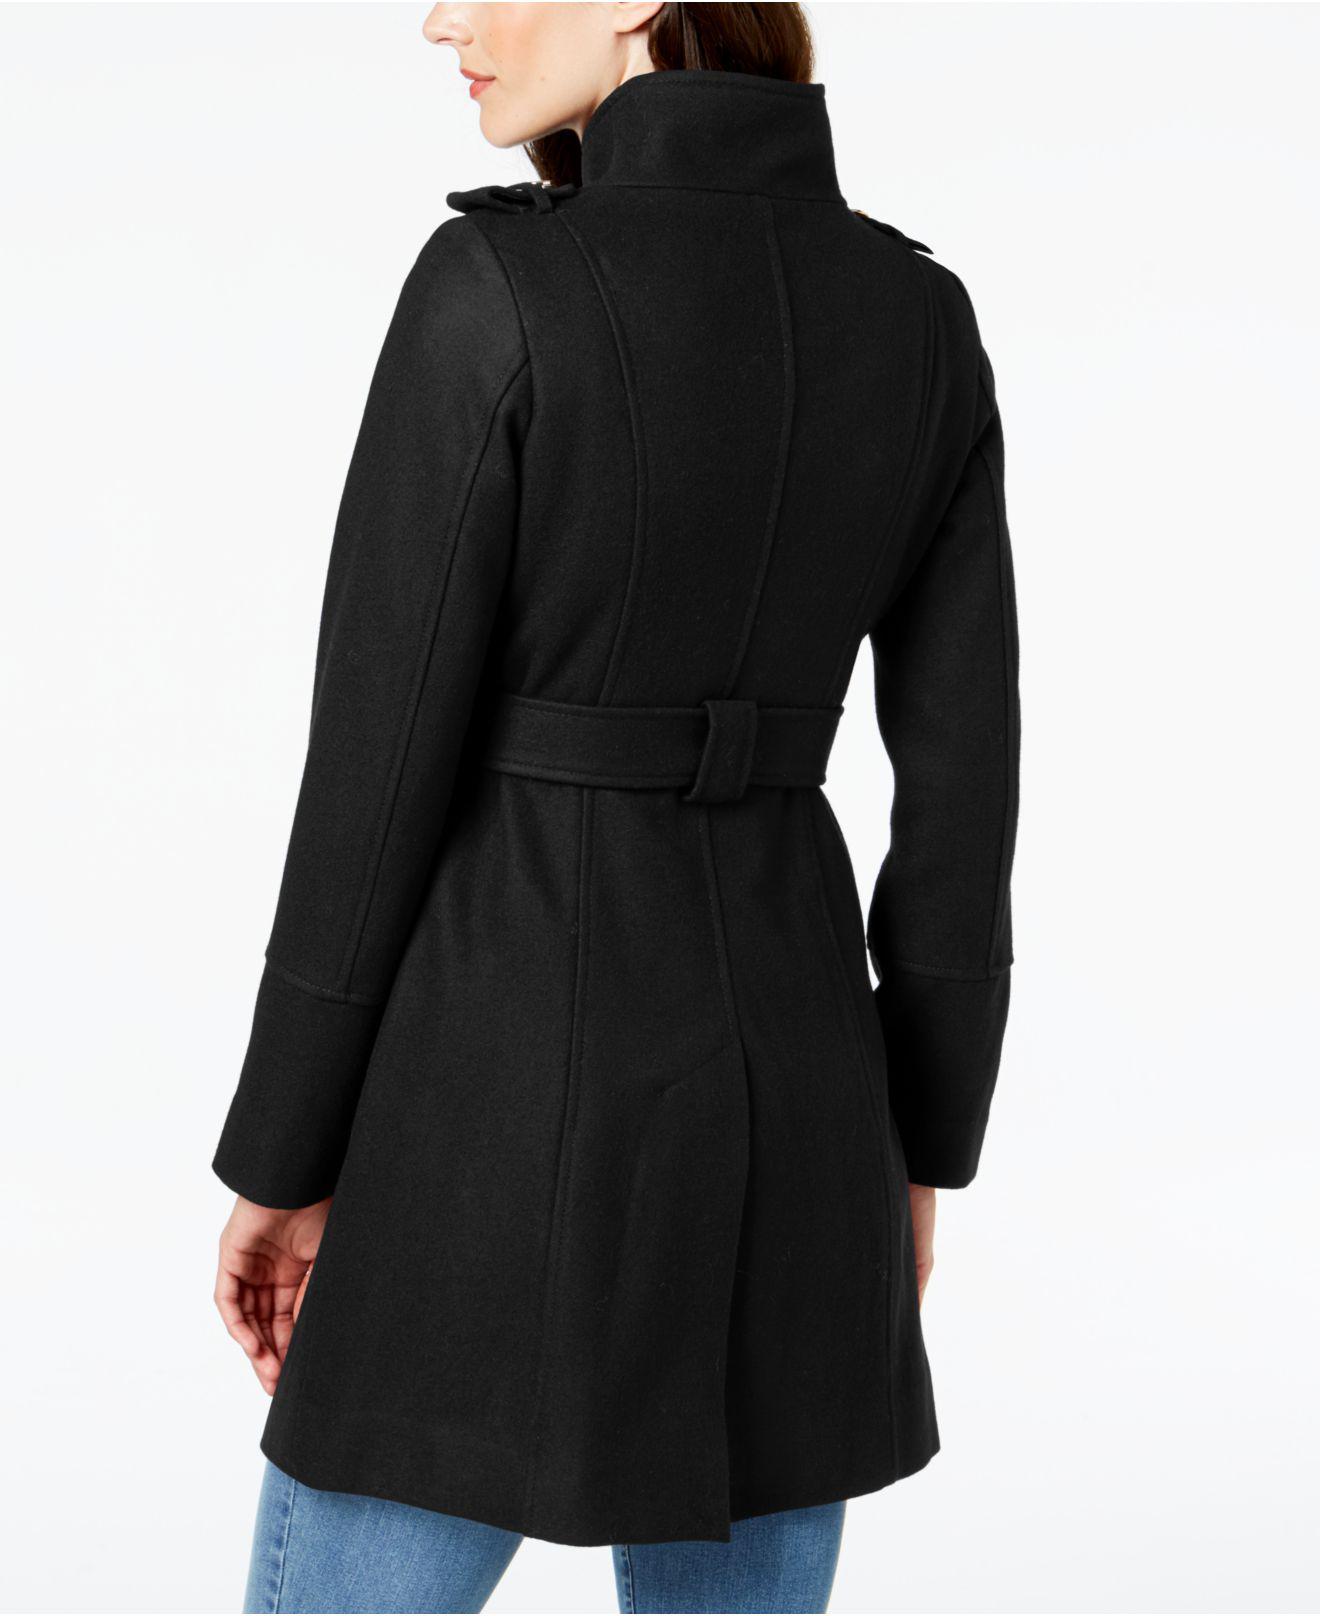 Guess Asymmetrical Belted Wool Wrap Coat in Black - Lyst